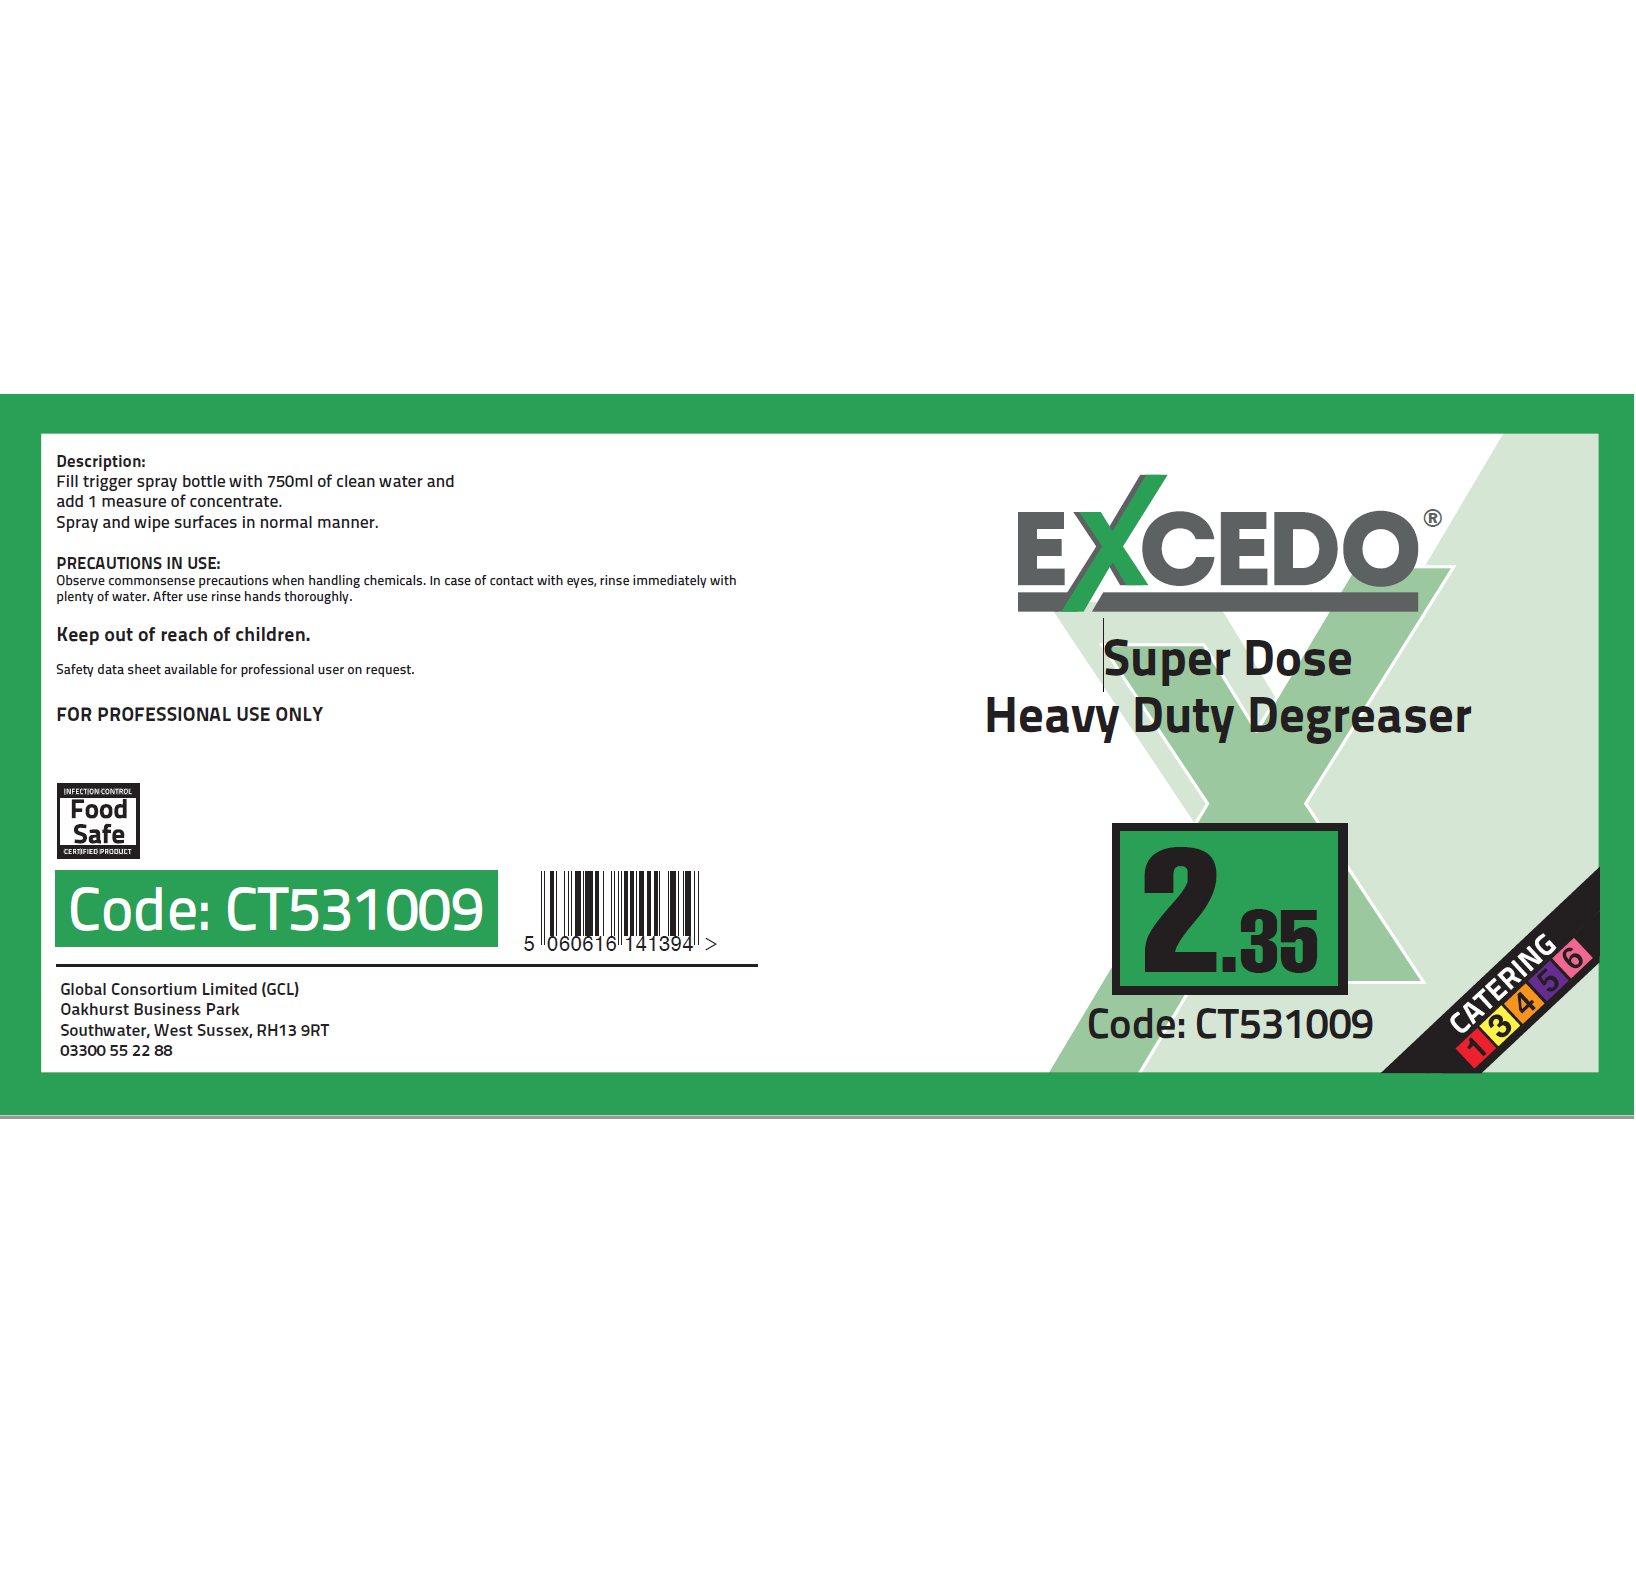 Excedo 2.35 Super Dose Heavy Duty Degreaser Trigger Label